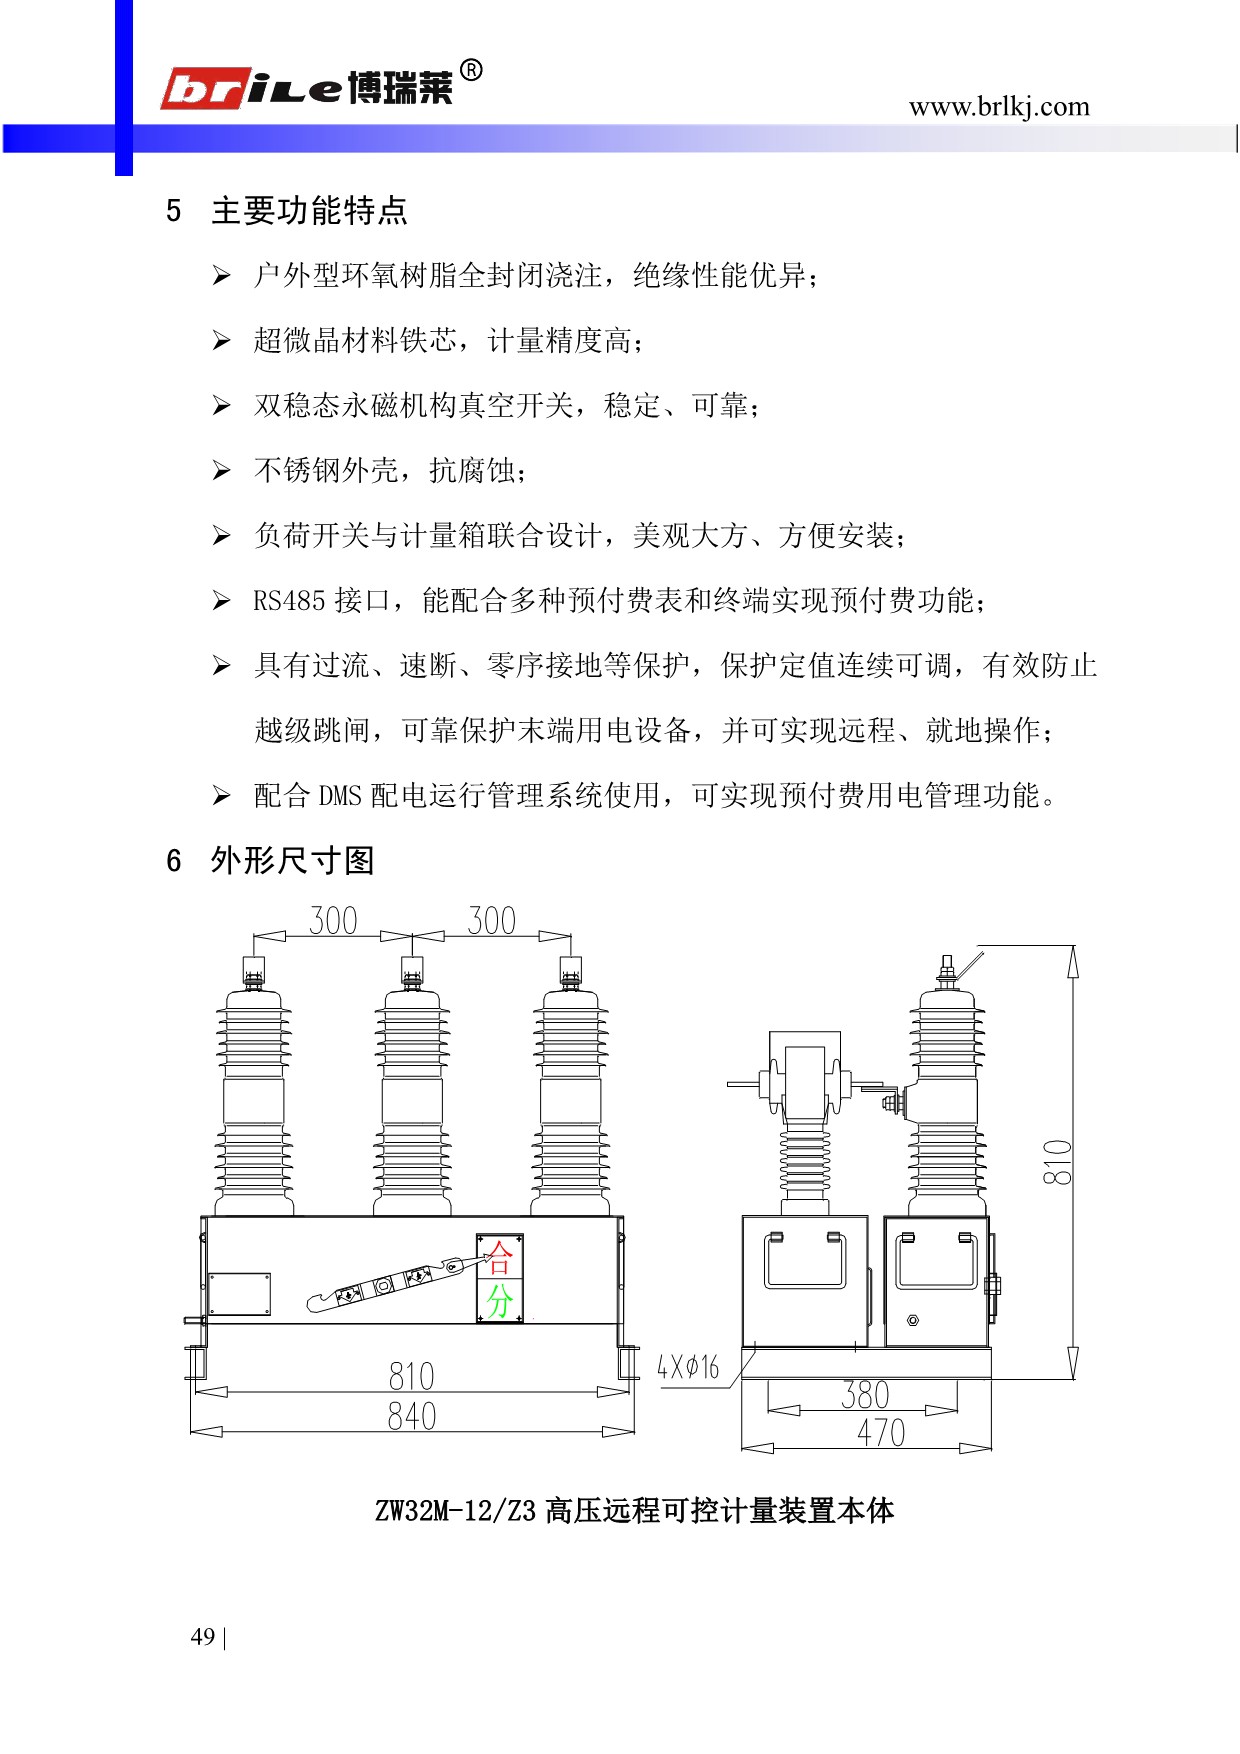 ZW32M-12/Z3高压远程可控计量装置(图3)